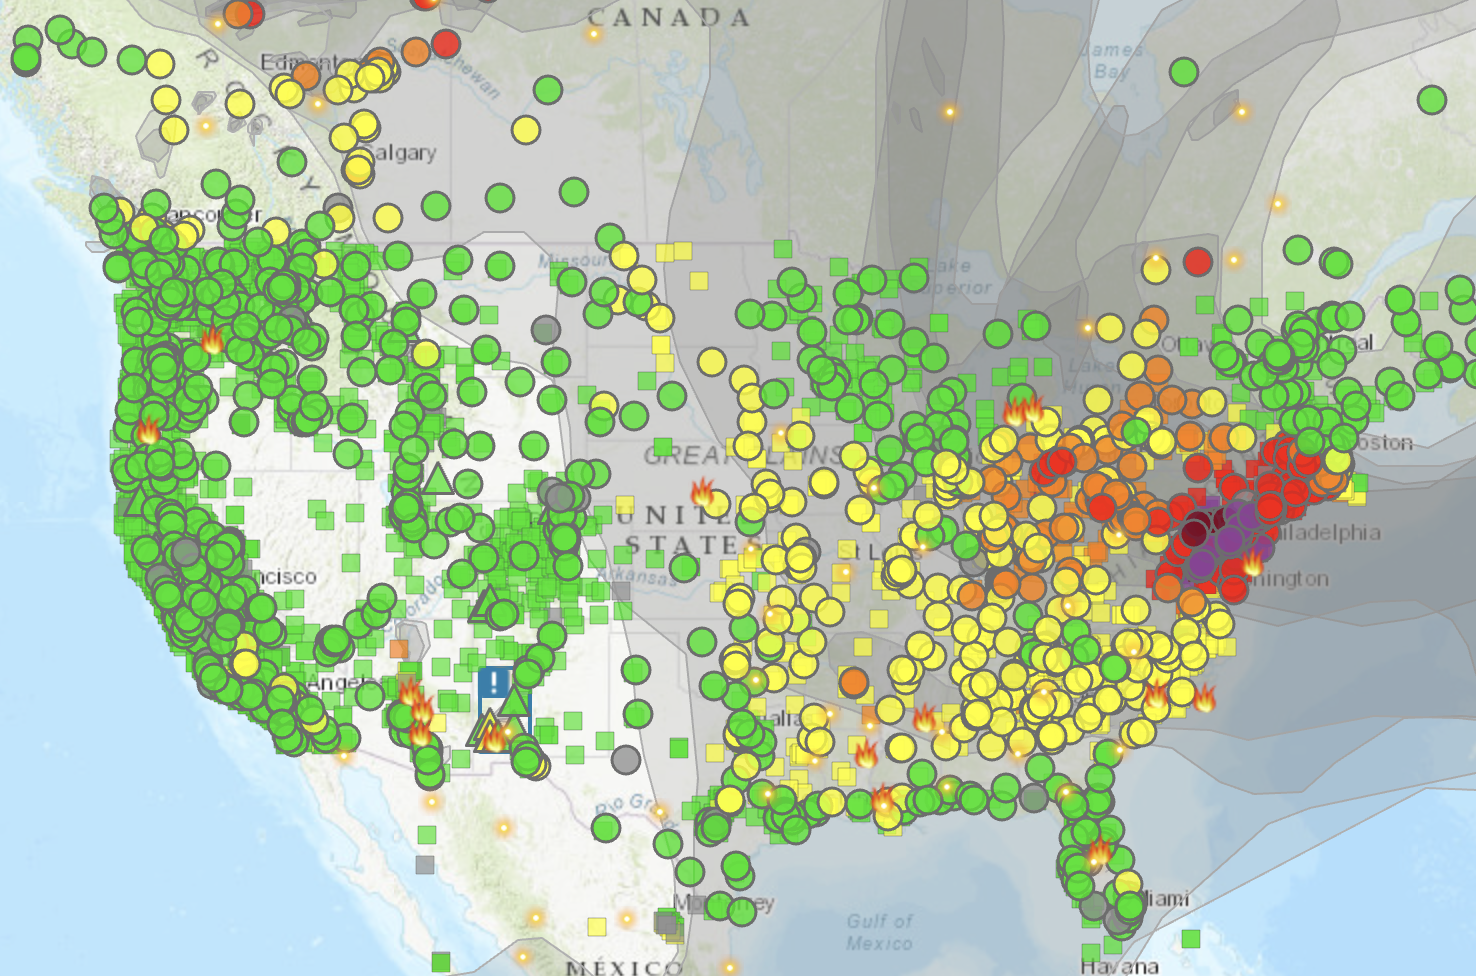 green air quality chart